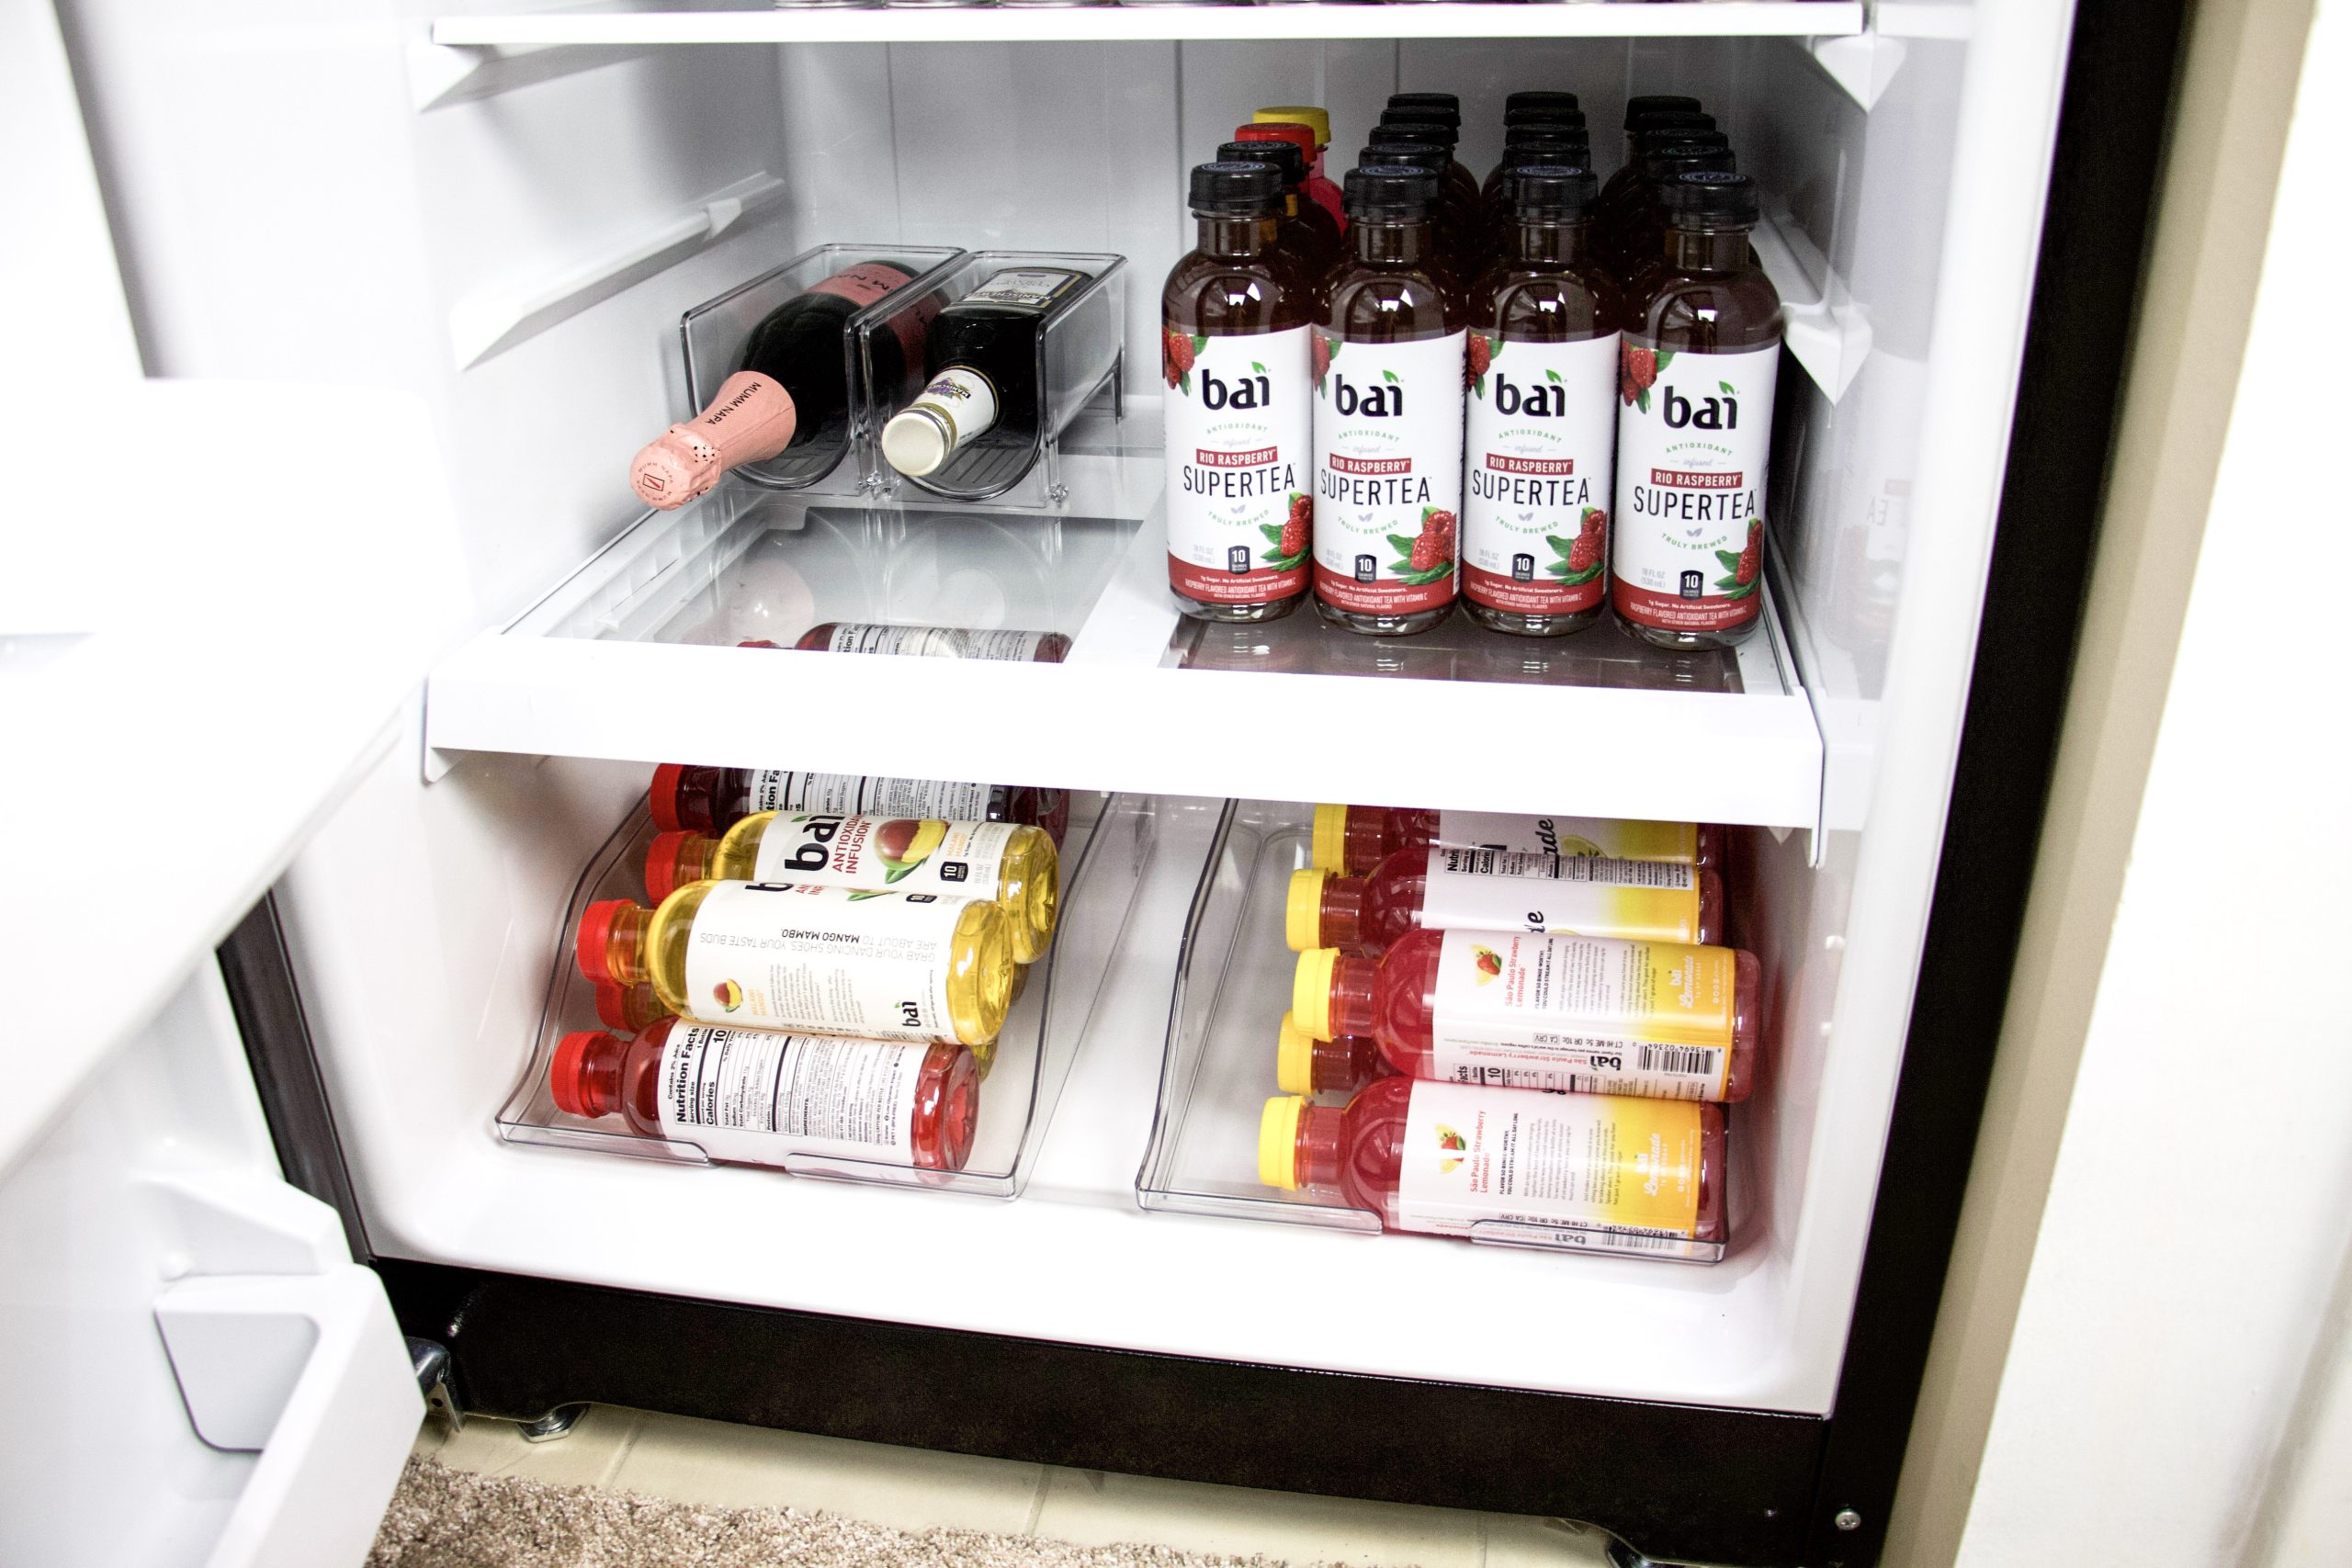 Similar items in fridge